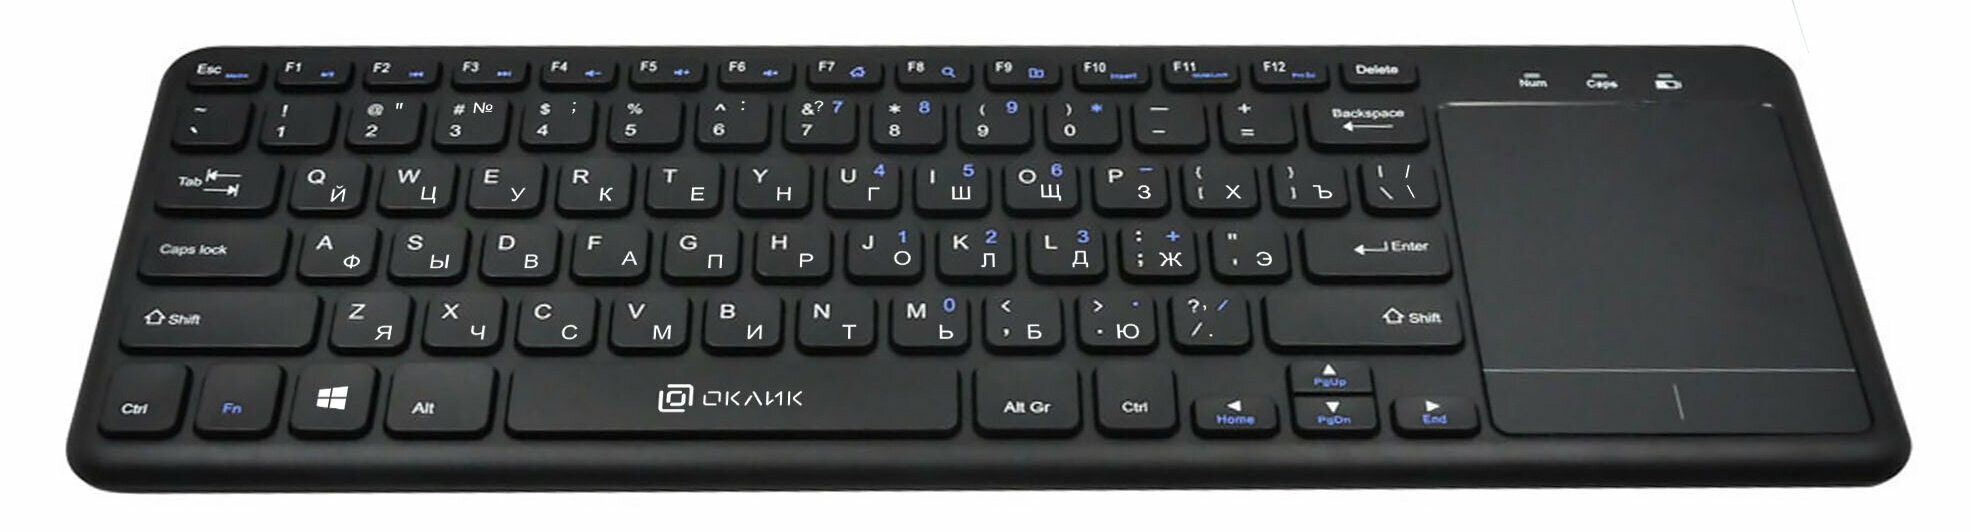 Клавиатура OKLICK 830ST Black USB